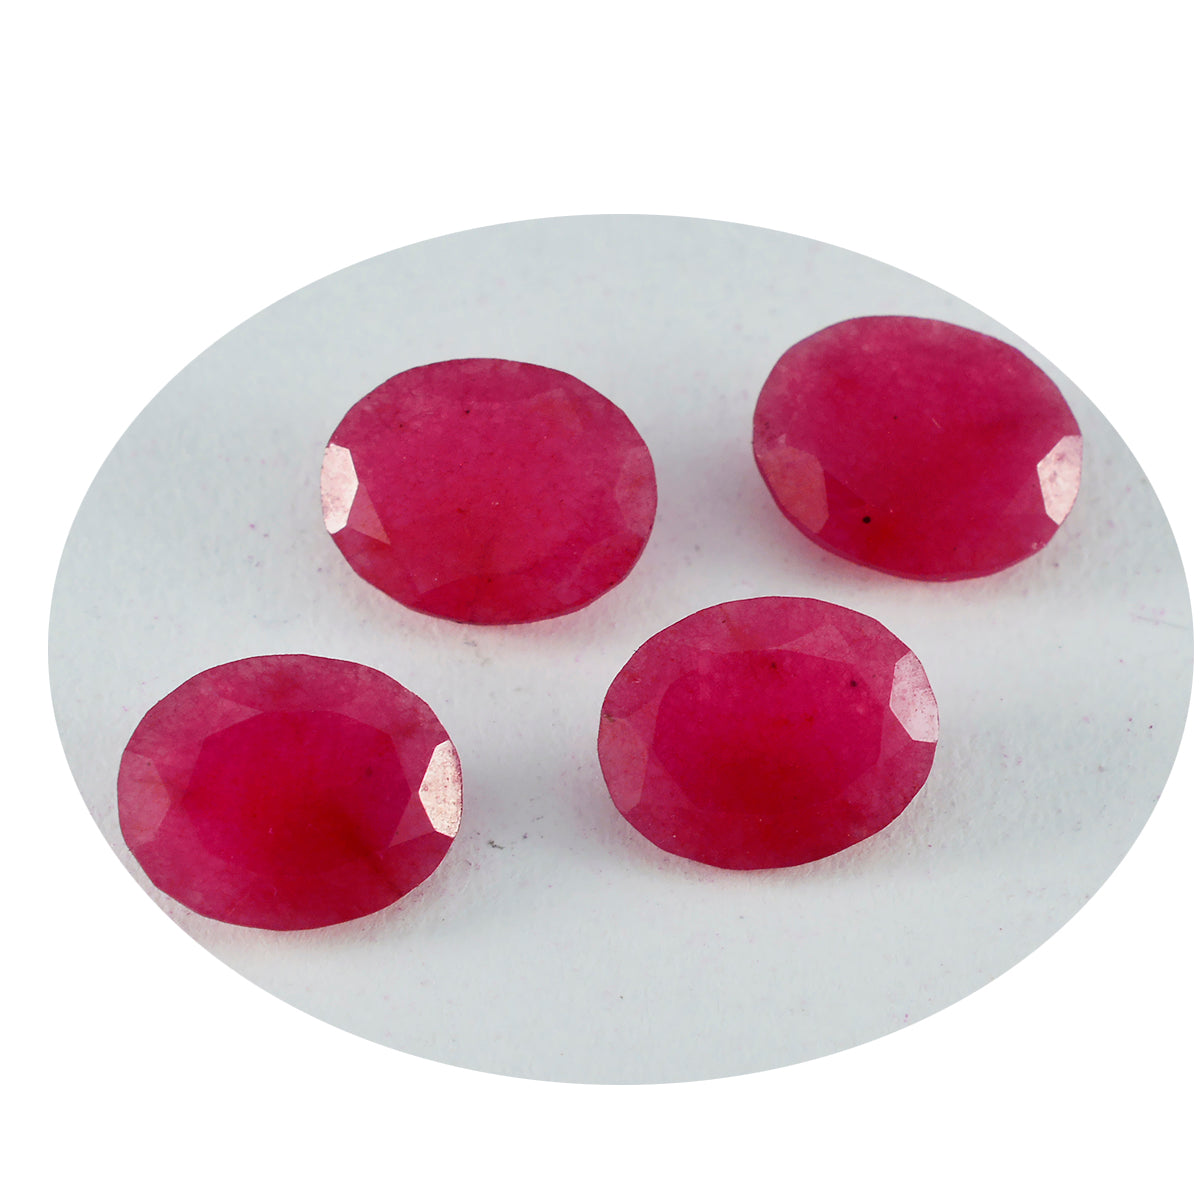 Riyogems 1PC natuurlijke rode jaspis gefacetteerd 10x12 mm ovale vorm knappe kwaliteit losse edelsteen